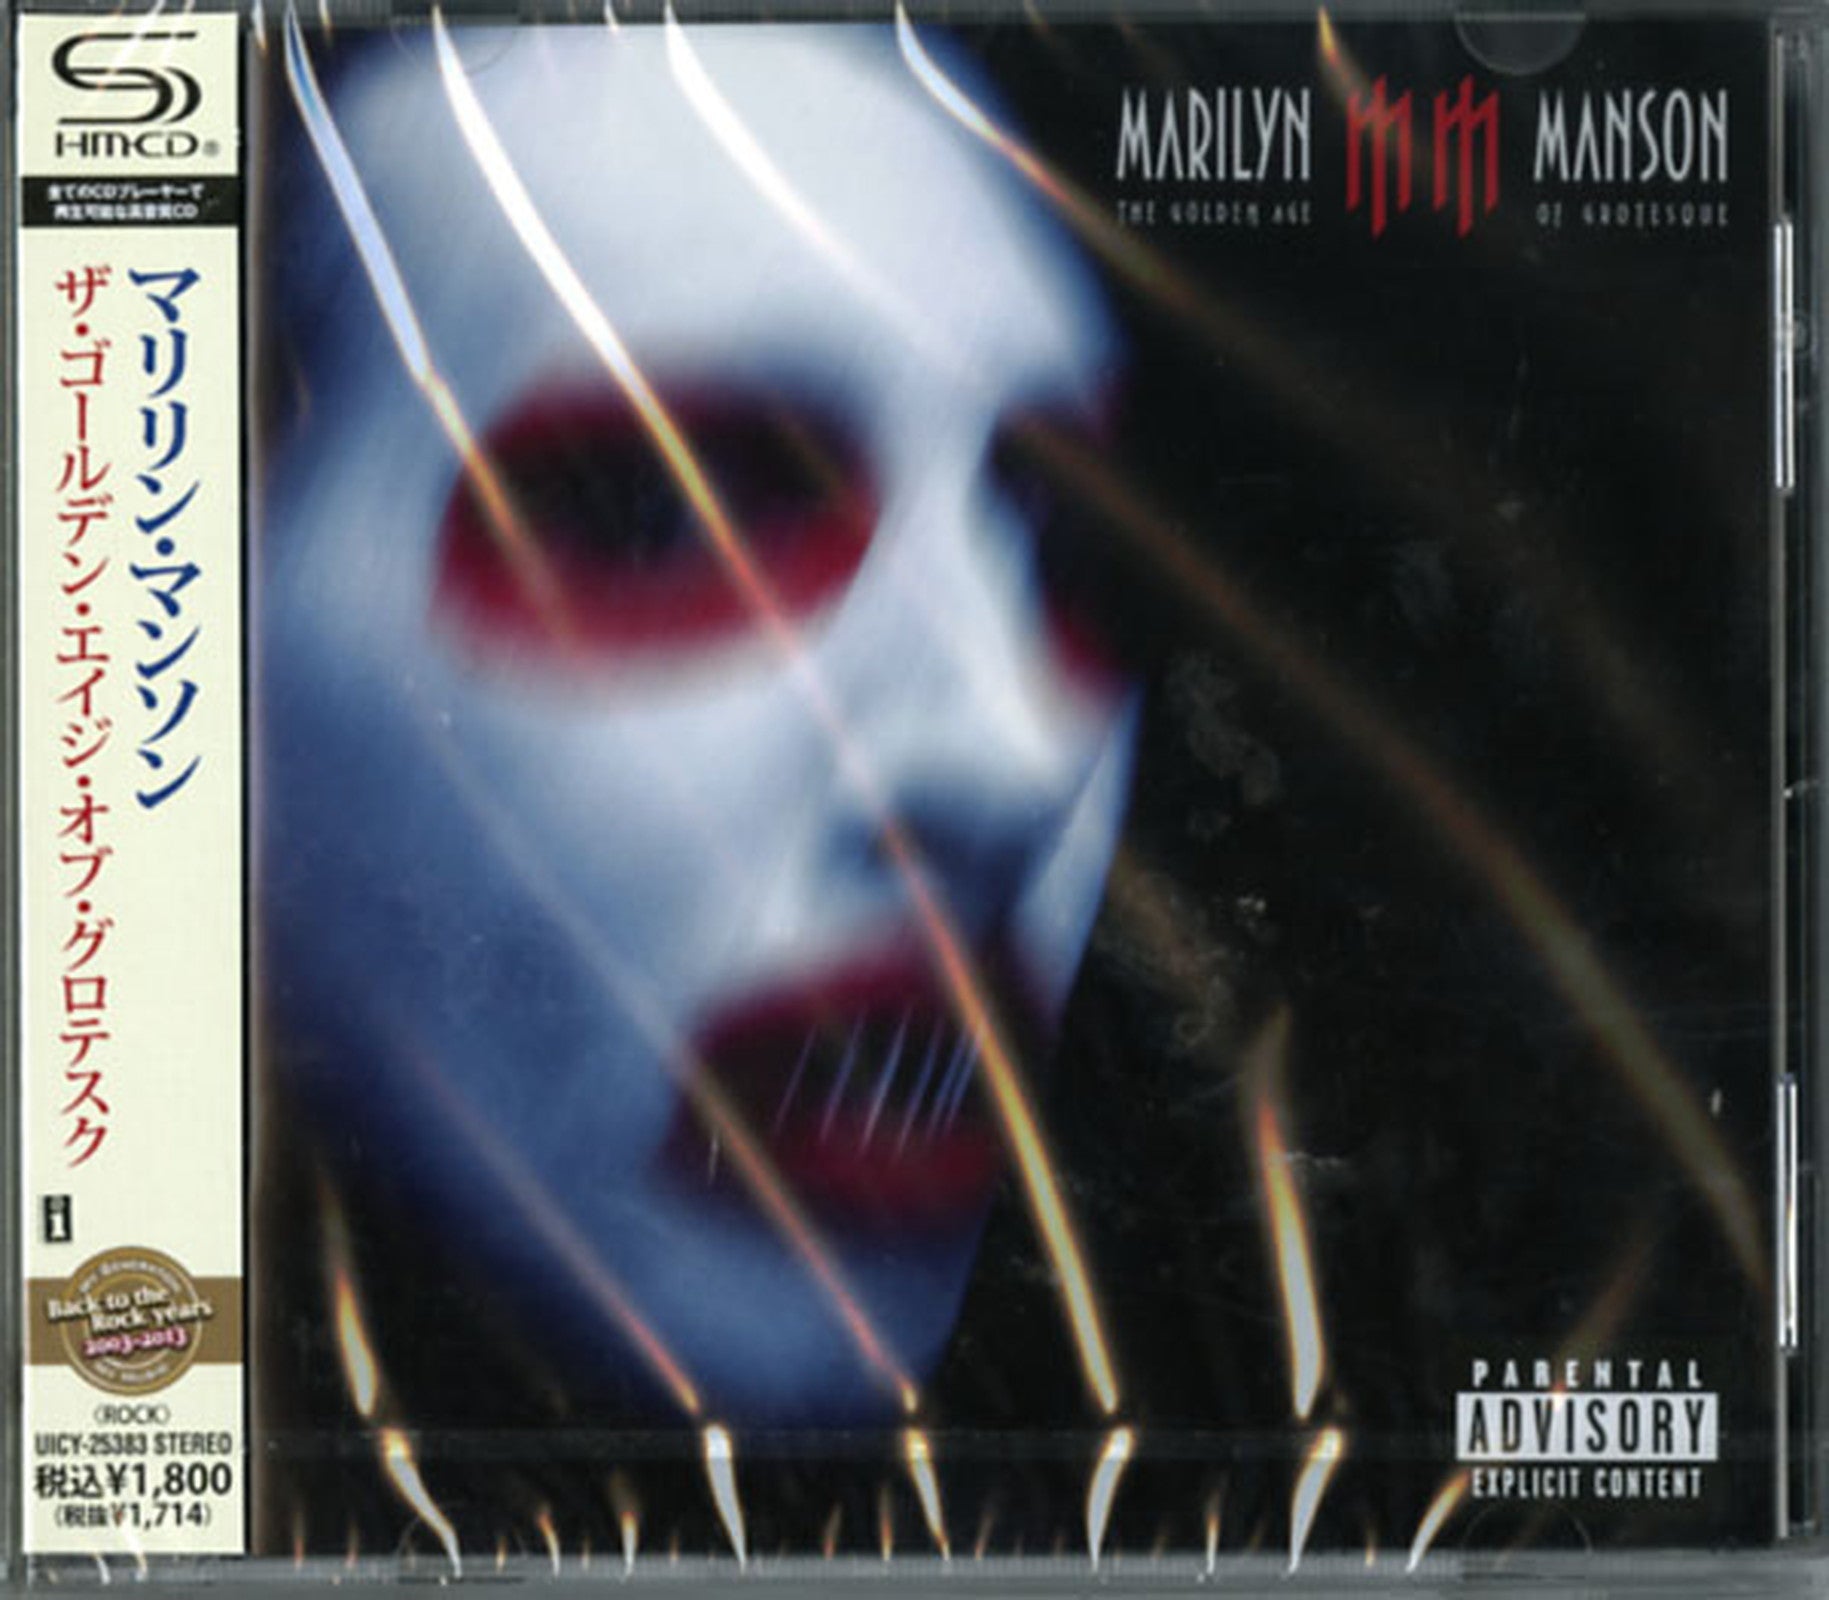 Marilyn Manson - The Golden Age Of Grotesque - Japan SHM-CD Bonus Trac –  CDs Vinyl Japan Store Alternative/Indie, CD, Marilyn Manson, Rock, SHM-CD 